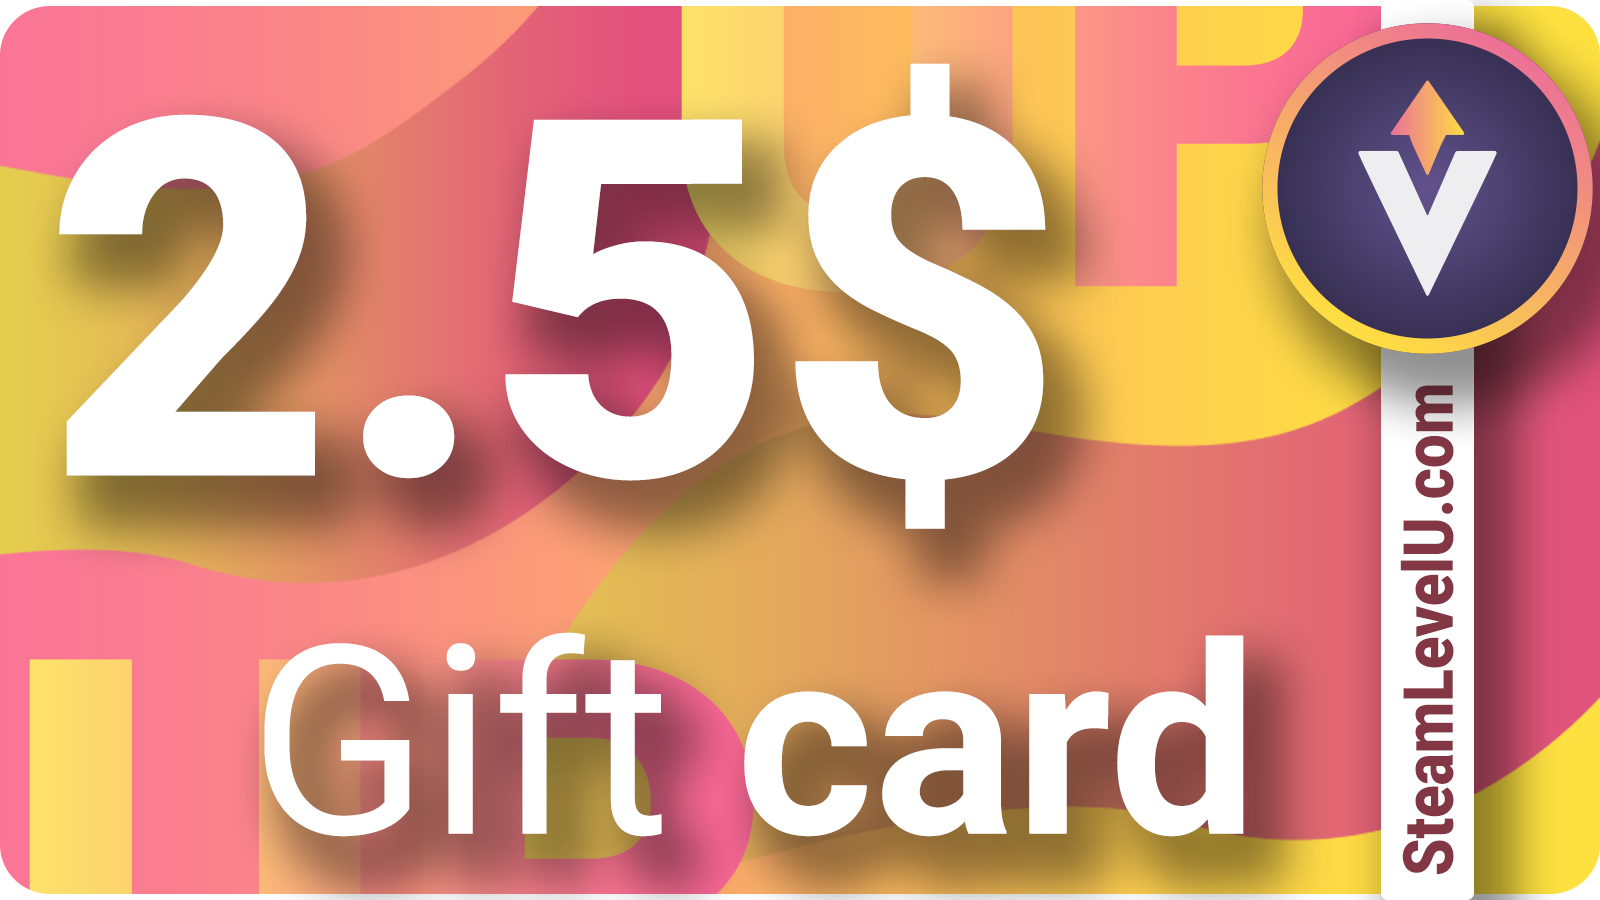 SteamLevelU 2,5 USD Gift Card